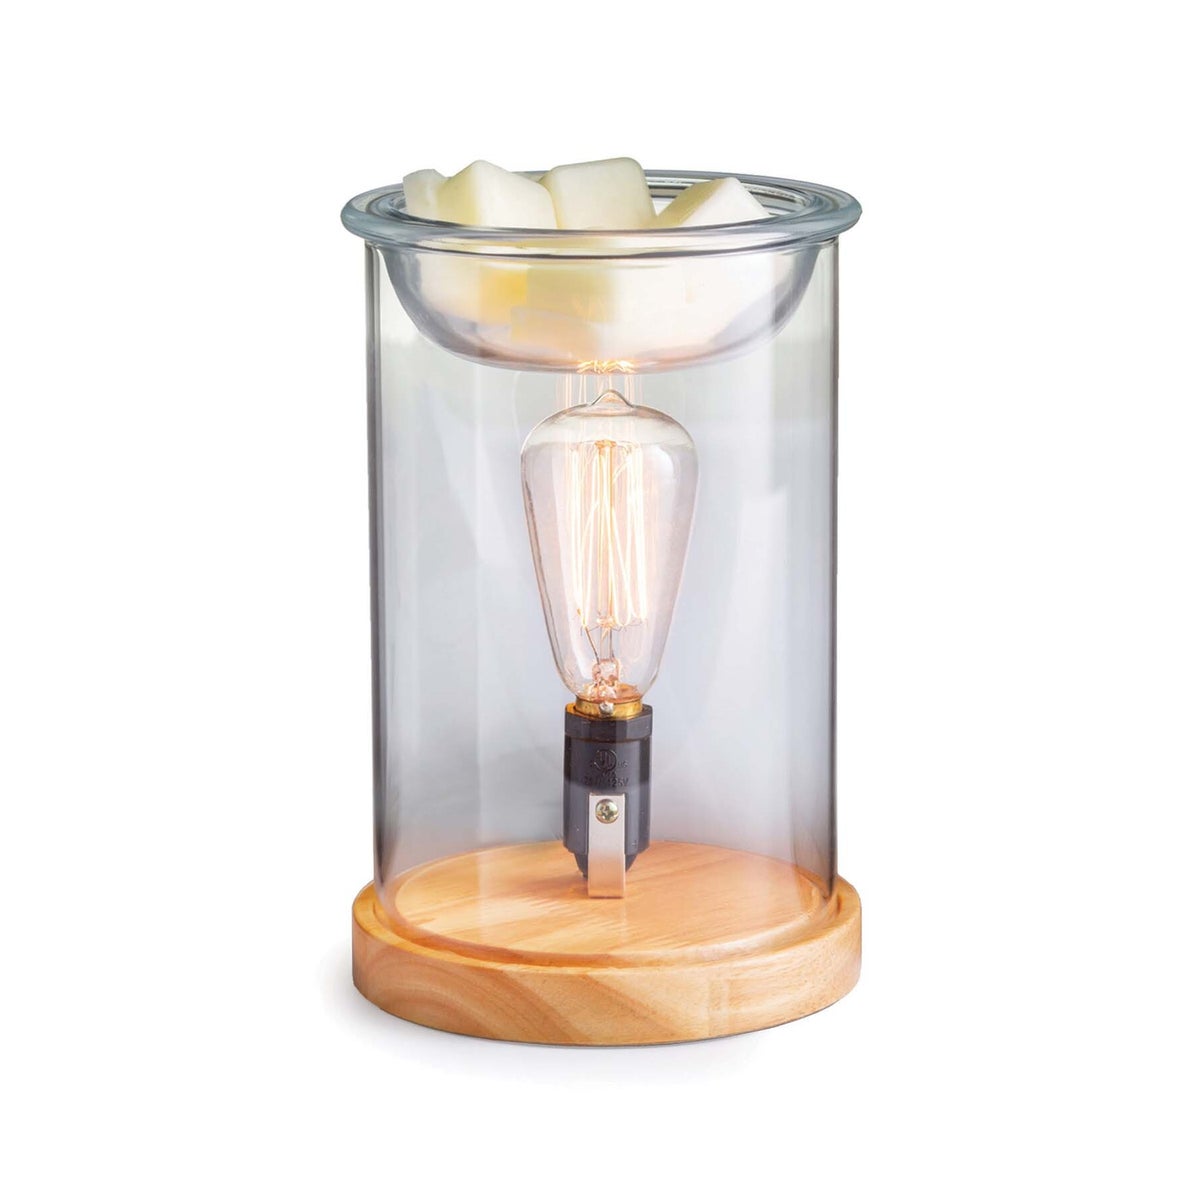 vintage style bulb illumination warmer wood and glass